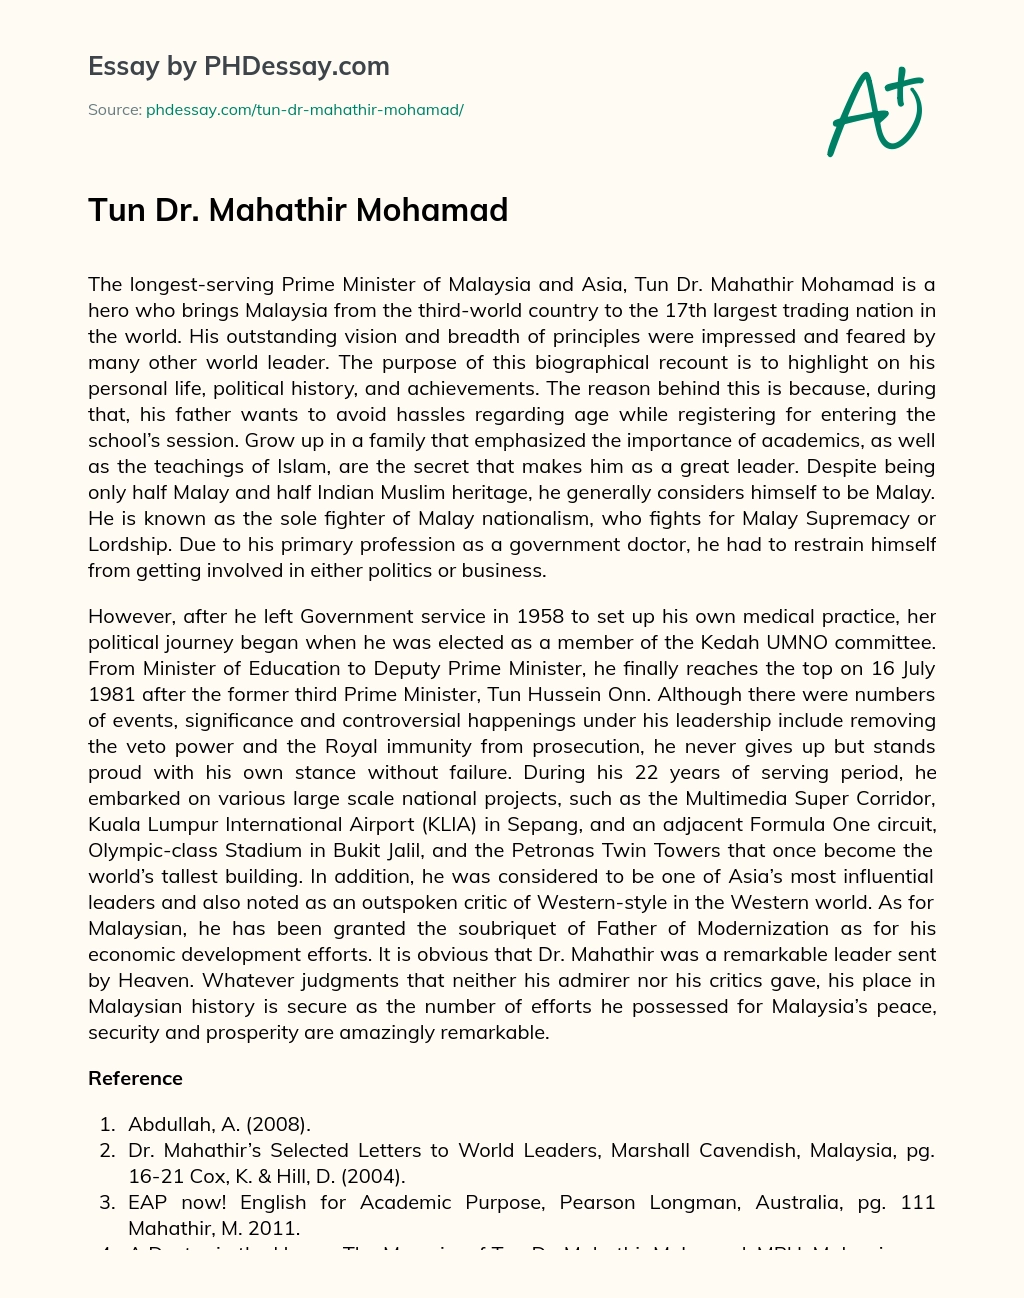 Tun Dr. Mahathir Mohamad essay